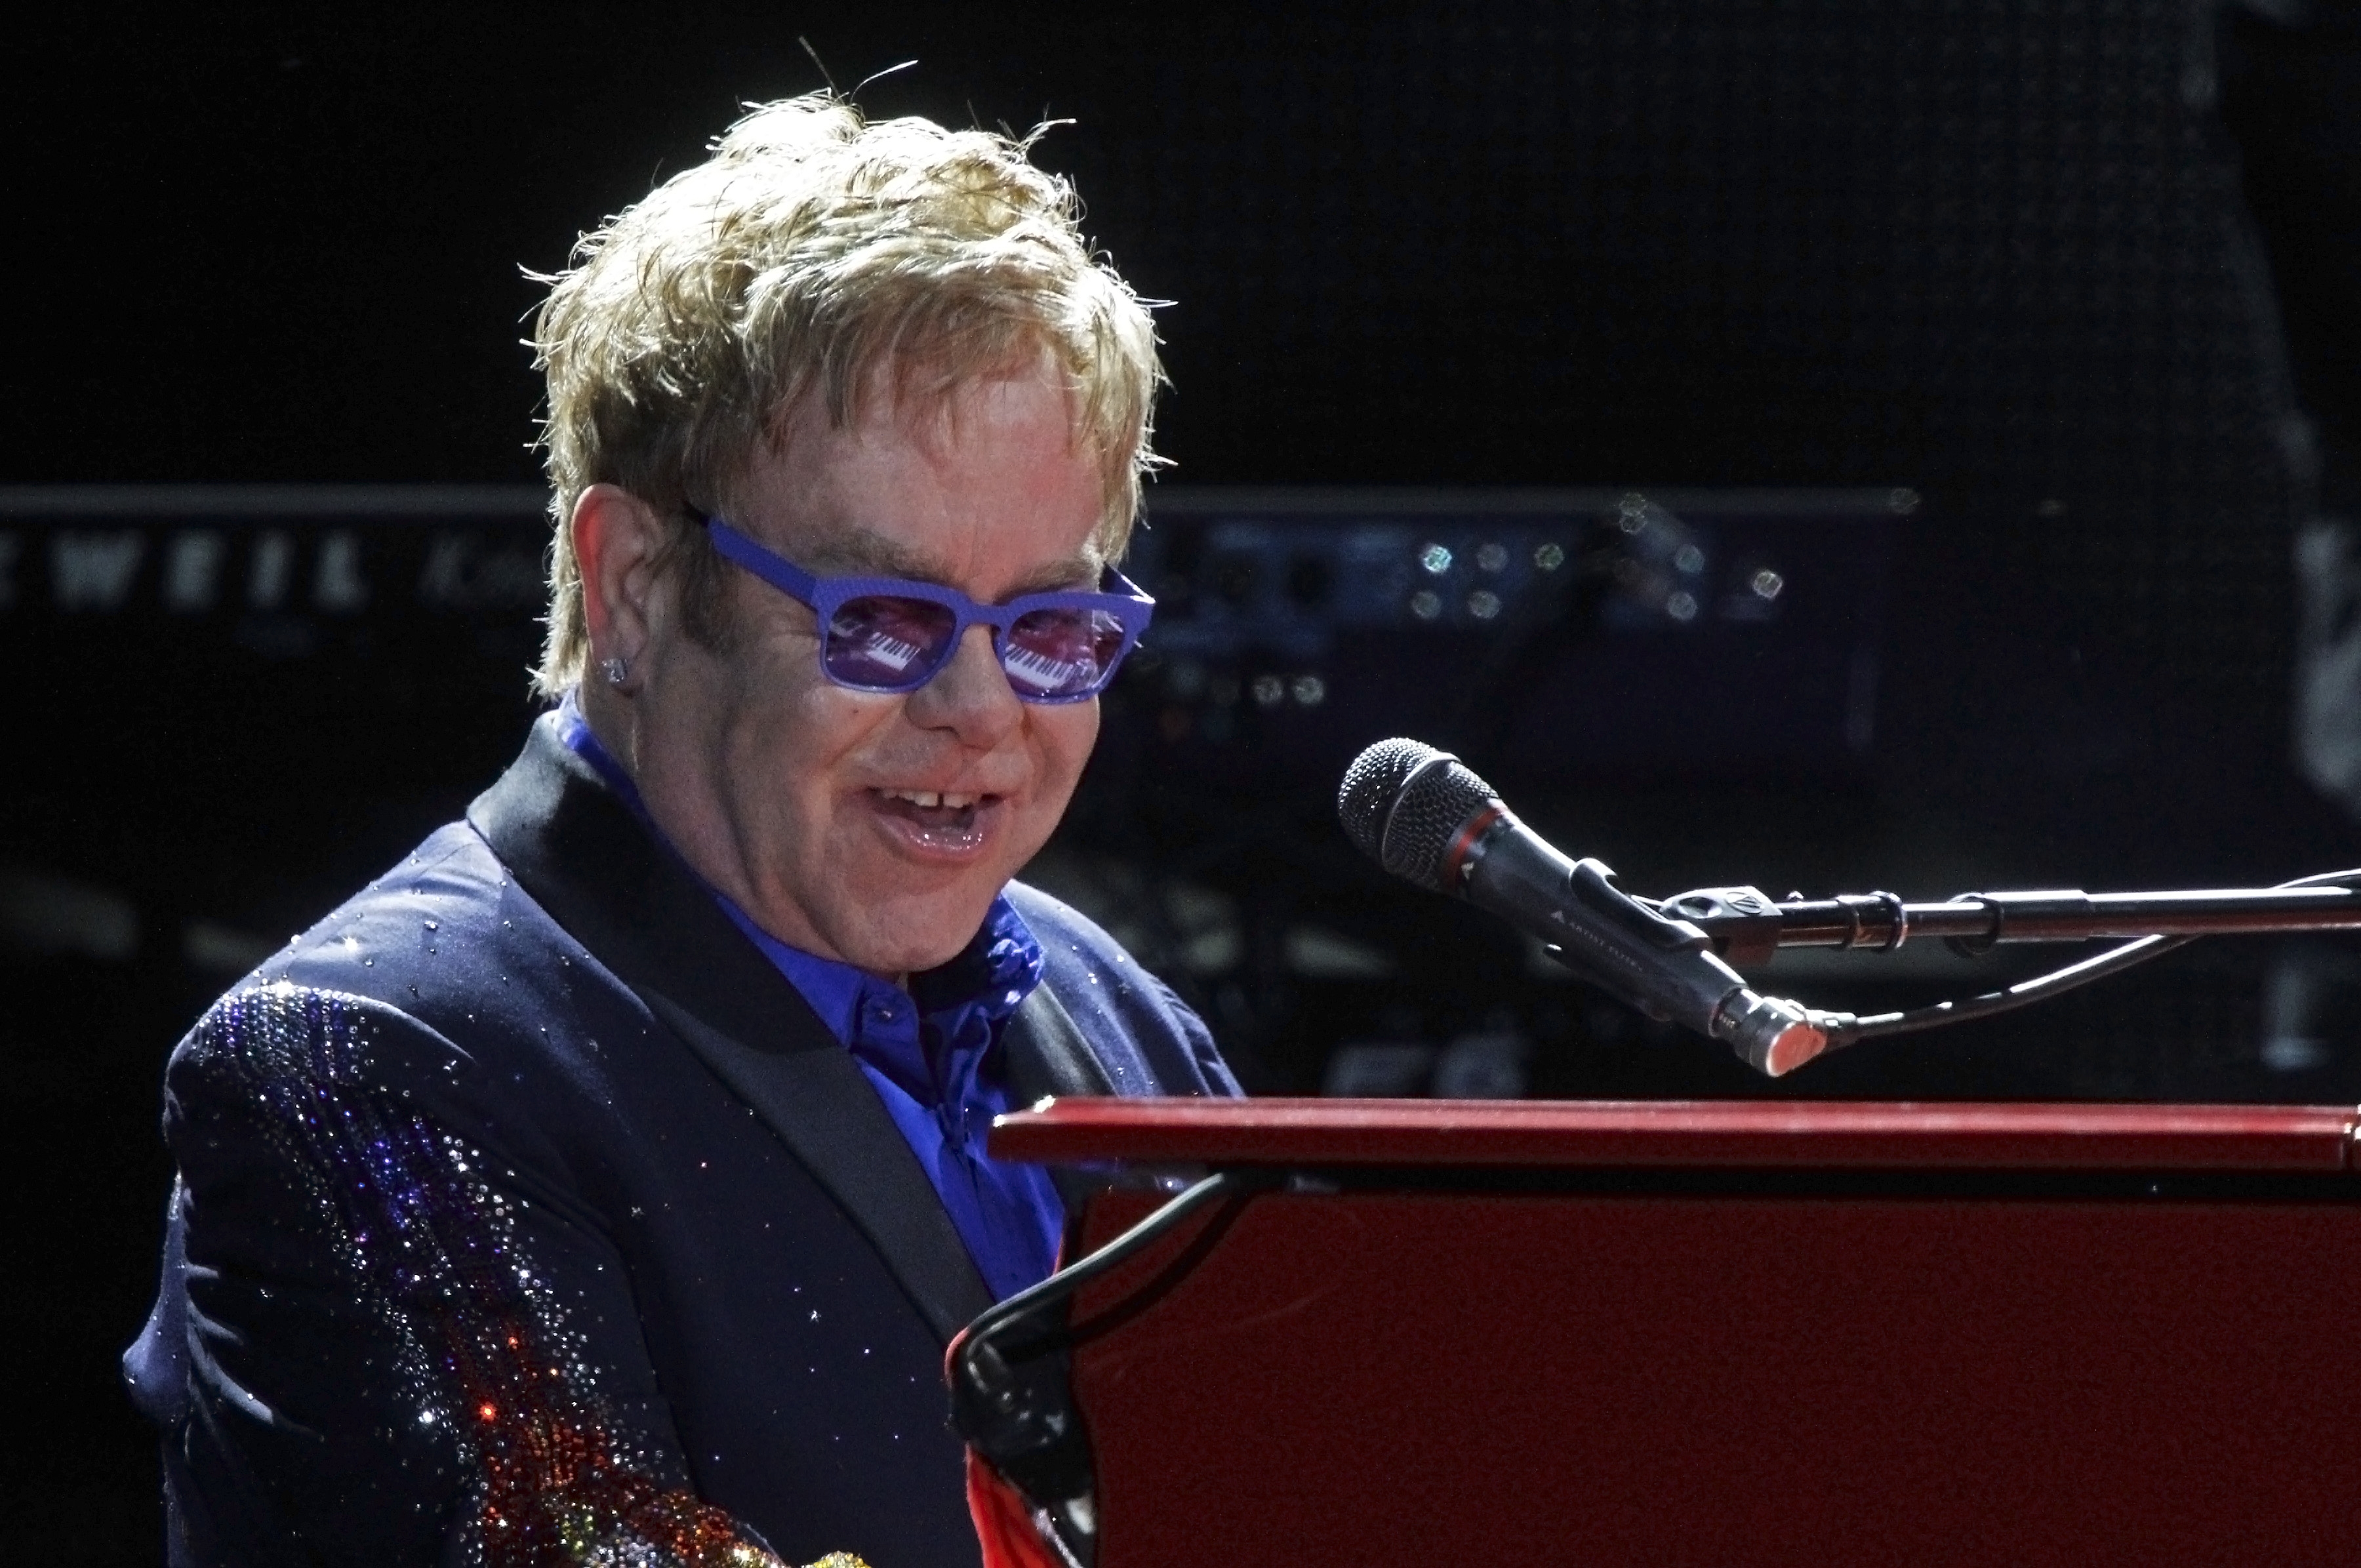 Elton John: Jesus Christ would support same-sex marriage - CBS News